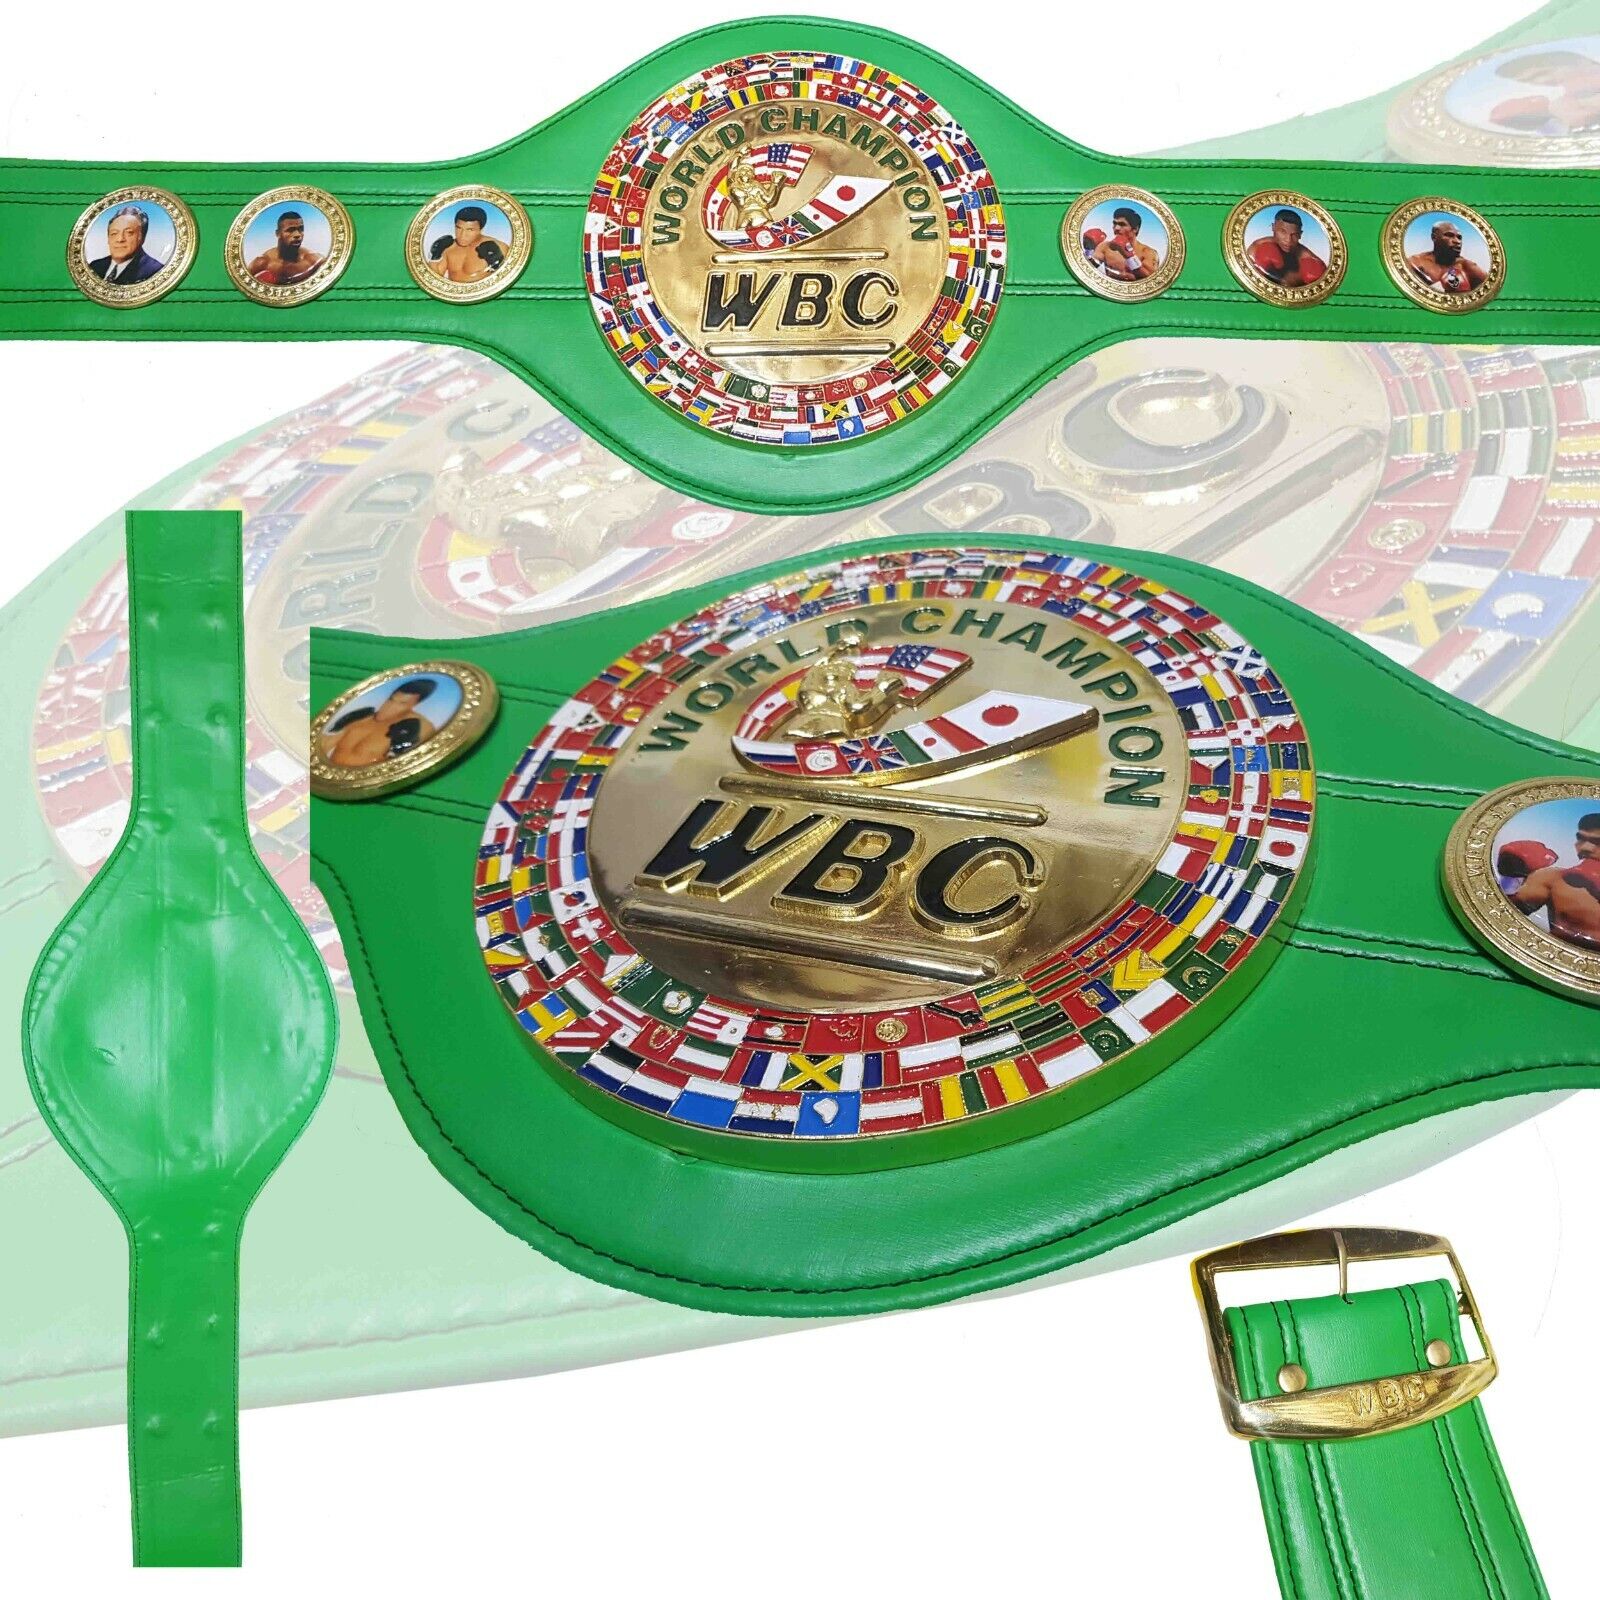 WBC World Boxing Champion Belt Adult Full Size Replica 3D Design Boxing Council